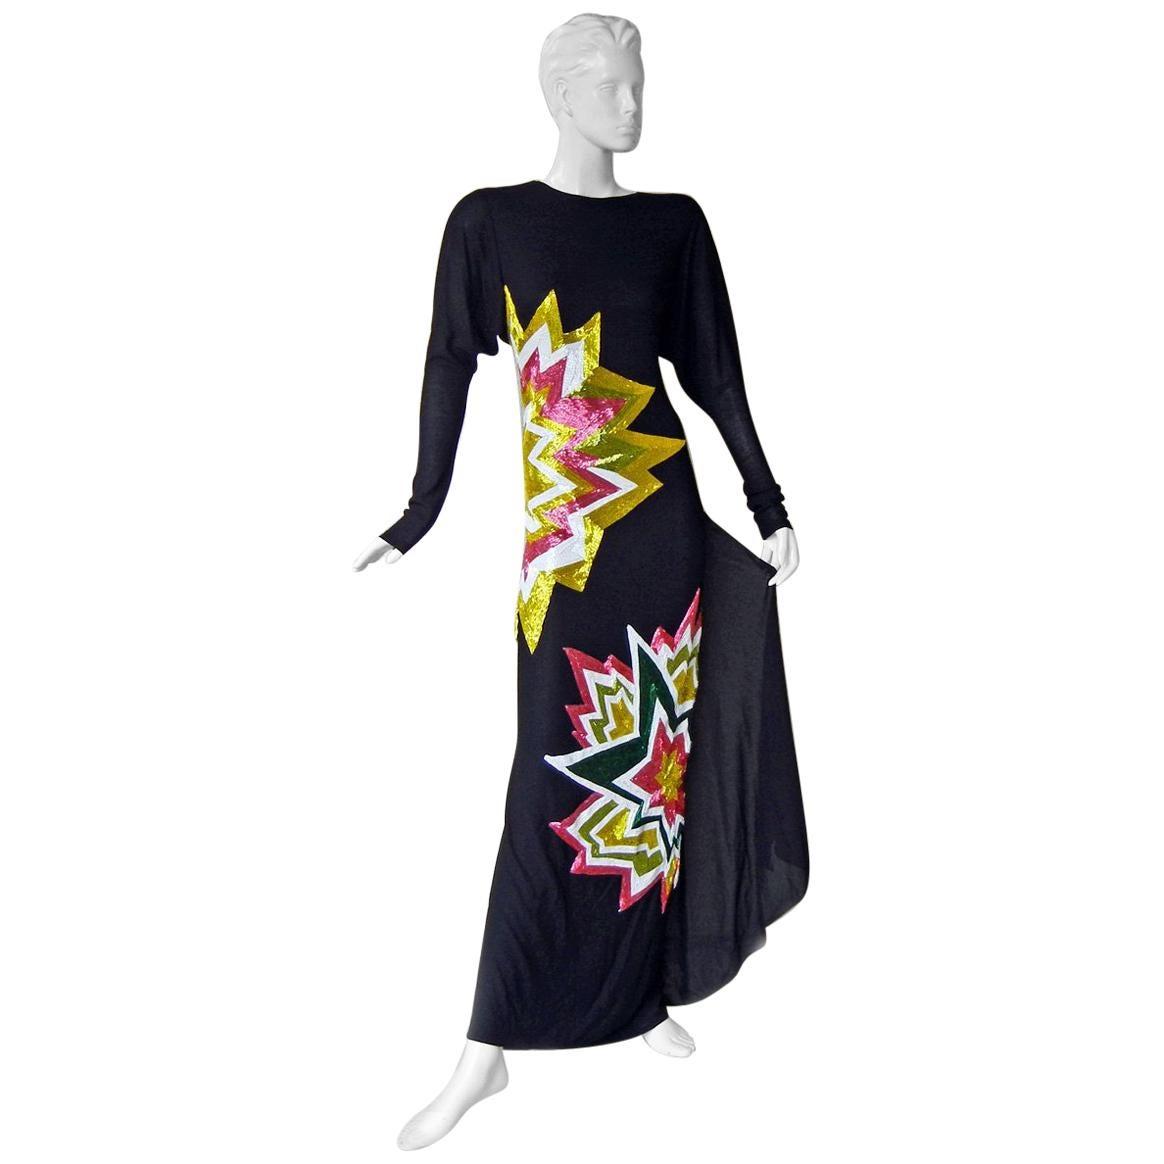 Tom Ford Lichtenstein-esque Ka-Pow Explosive Appliques Dress Gown  New! For Sale